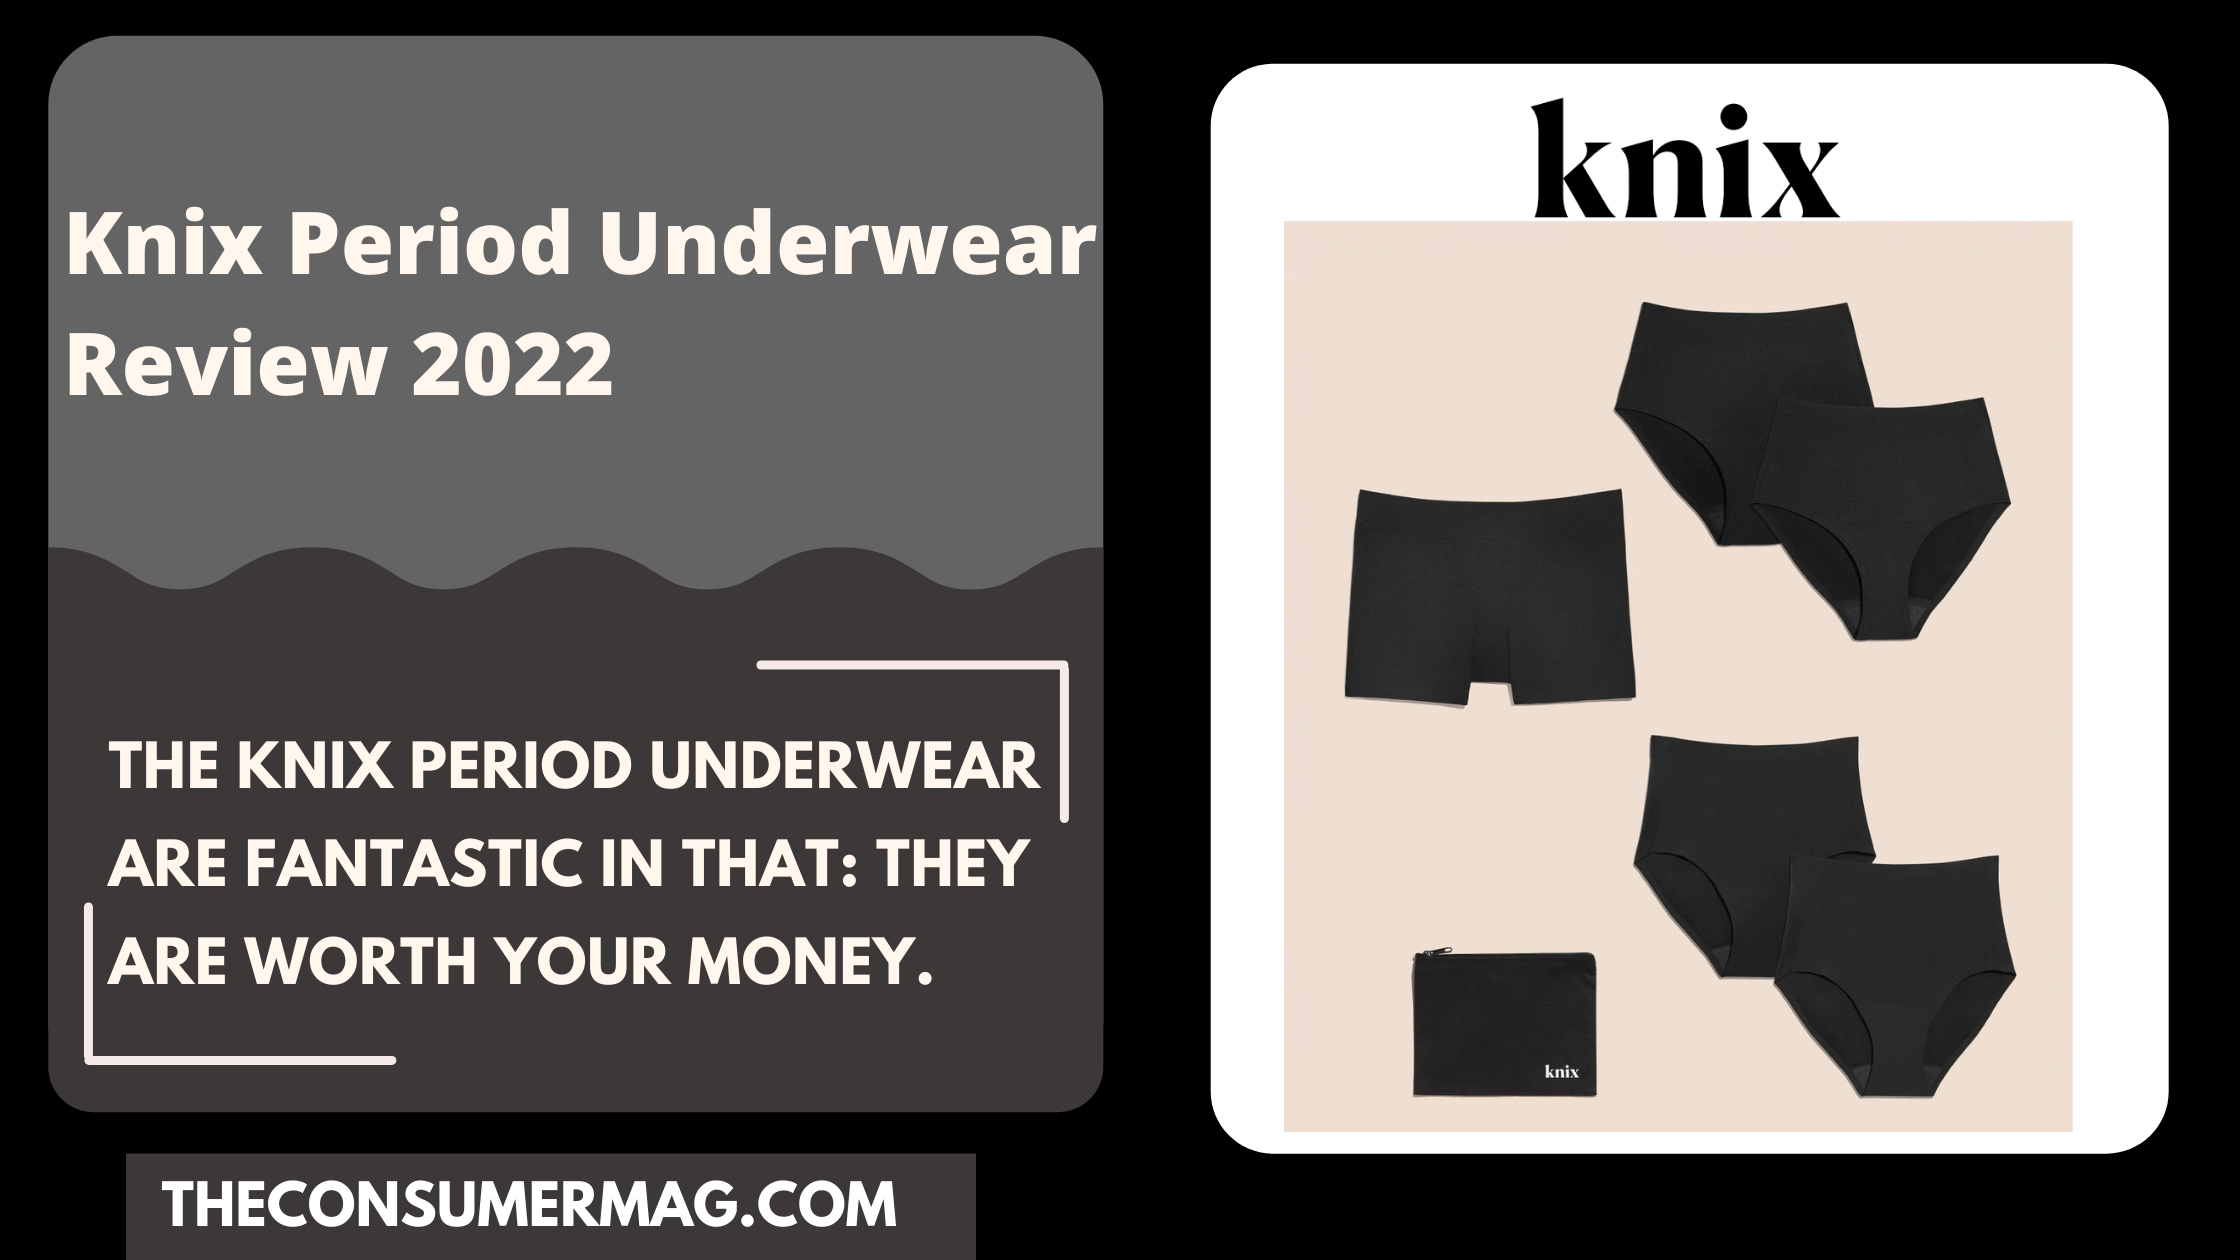 knix perid underwear featured image